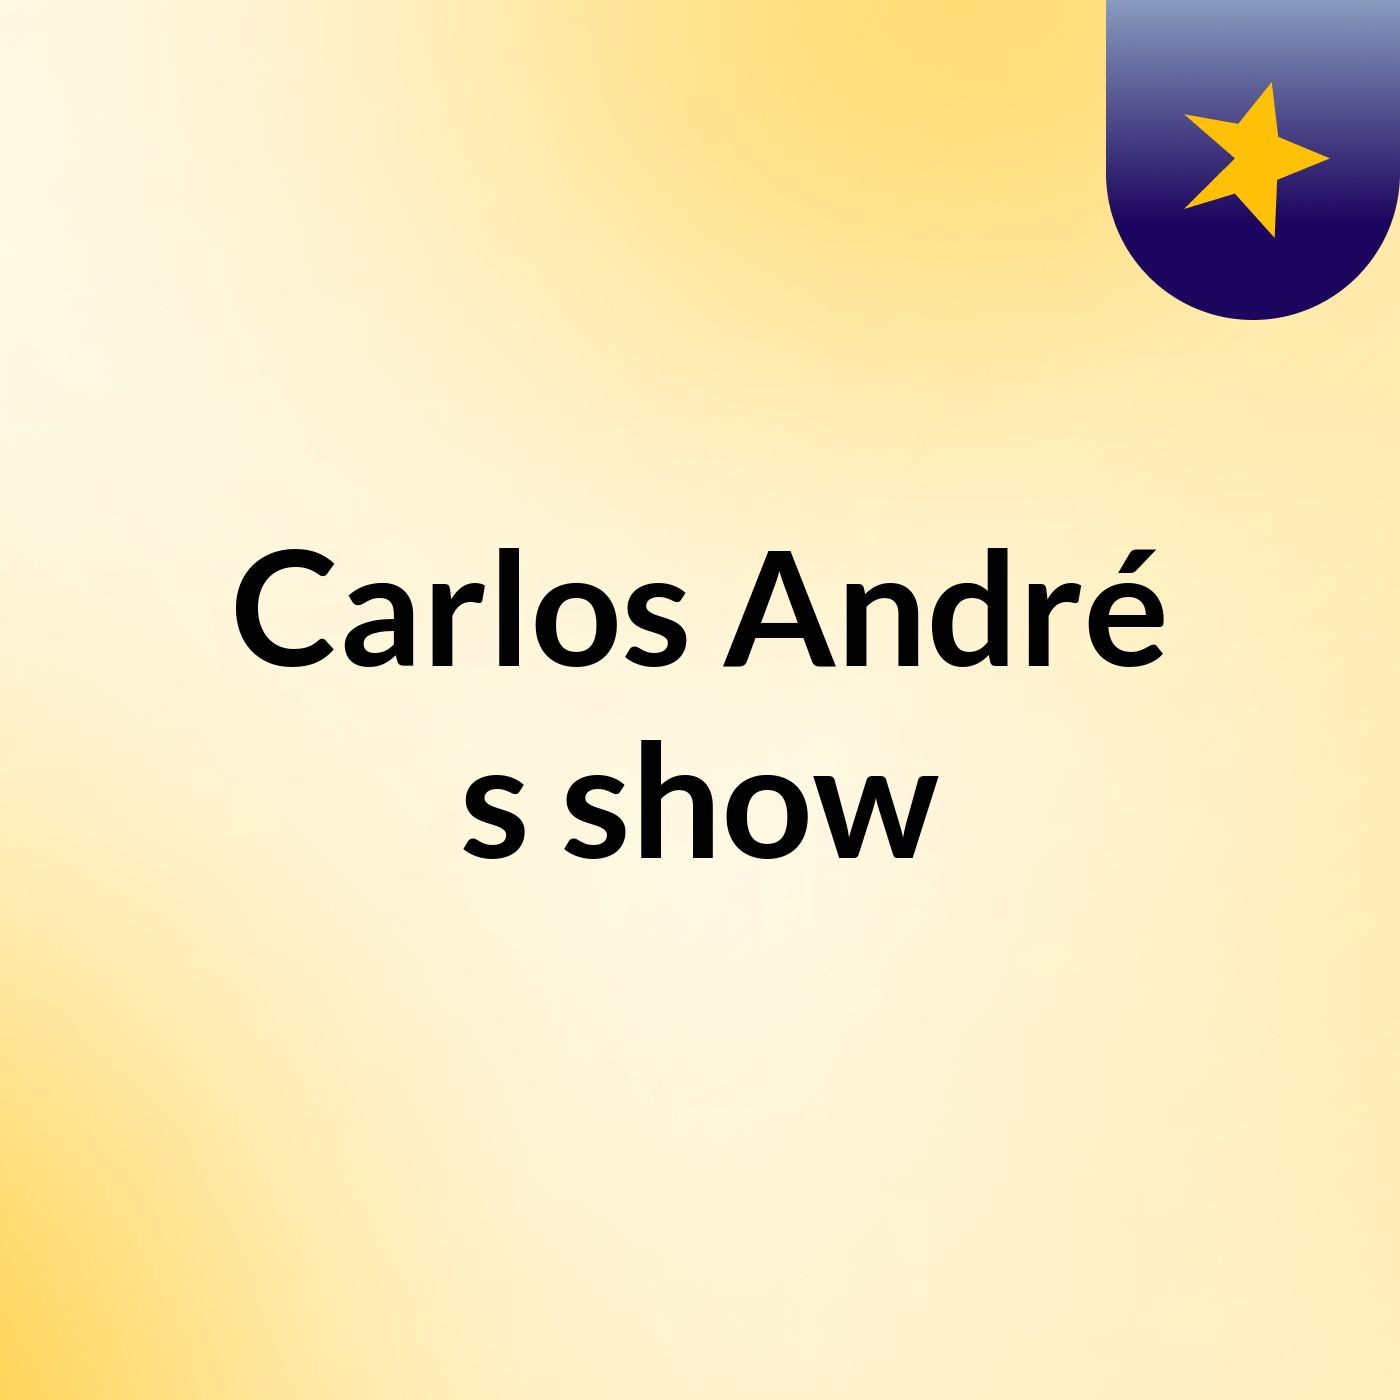 Carlos André's show